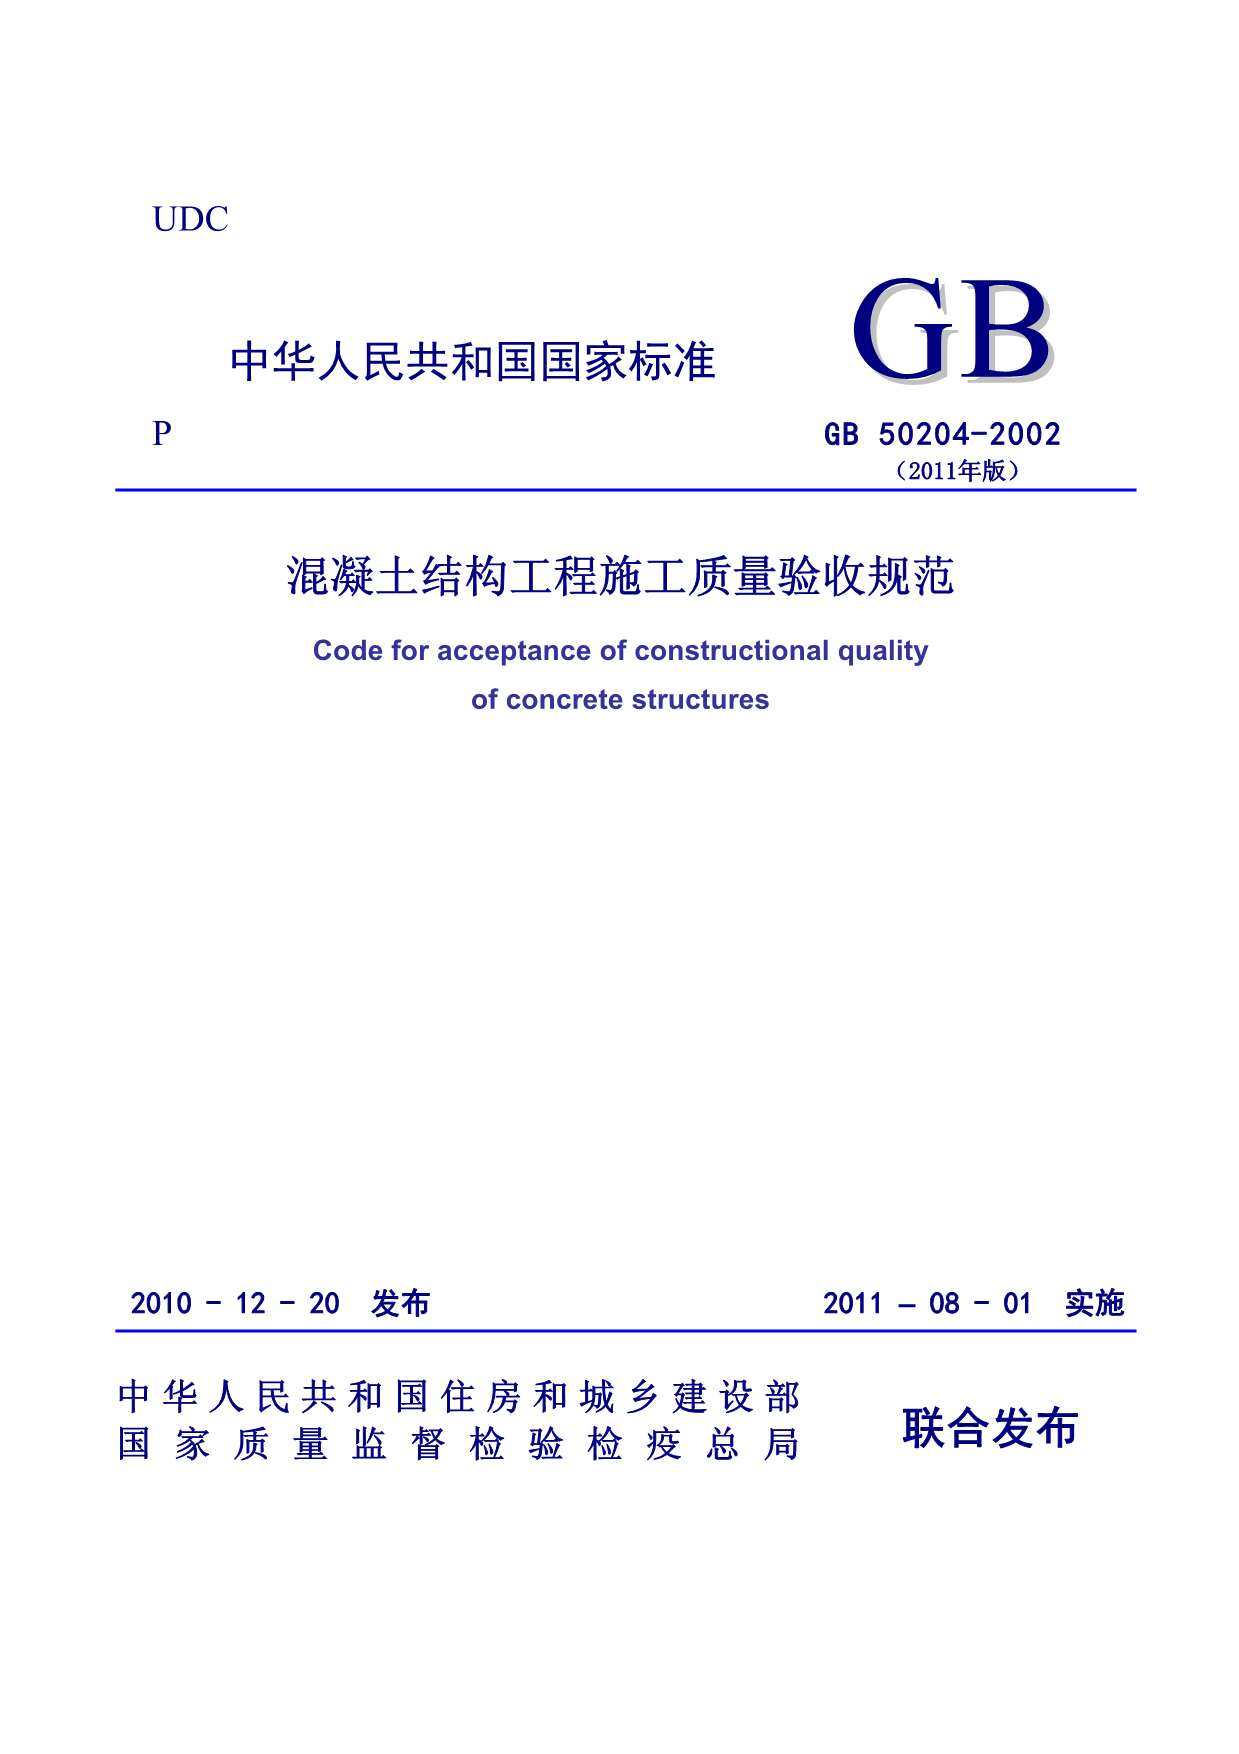 GB50204-2002(2011版)《混凝土结构工程施工质量验收规范》